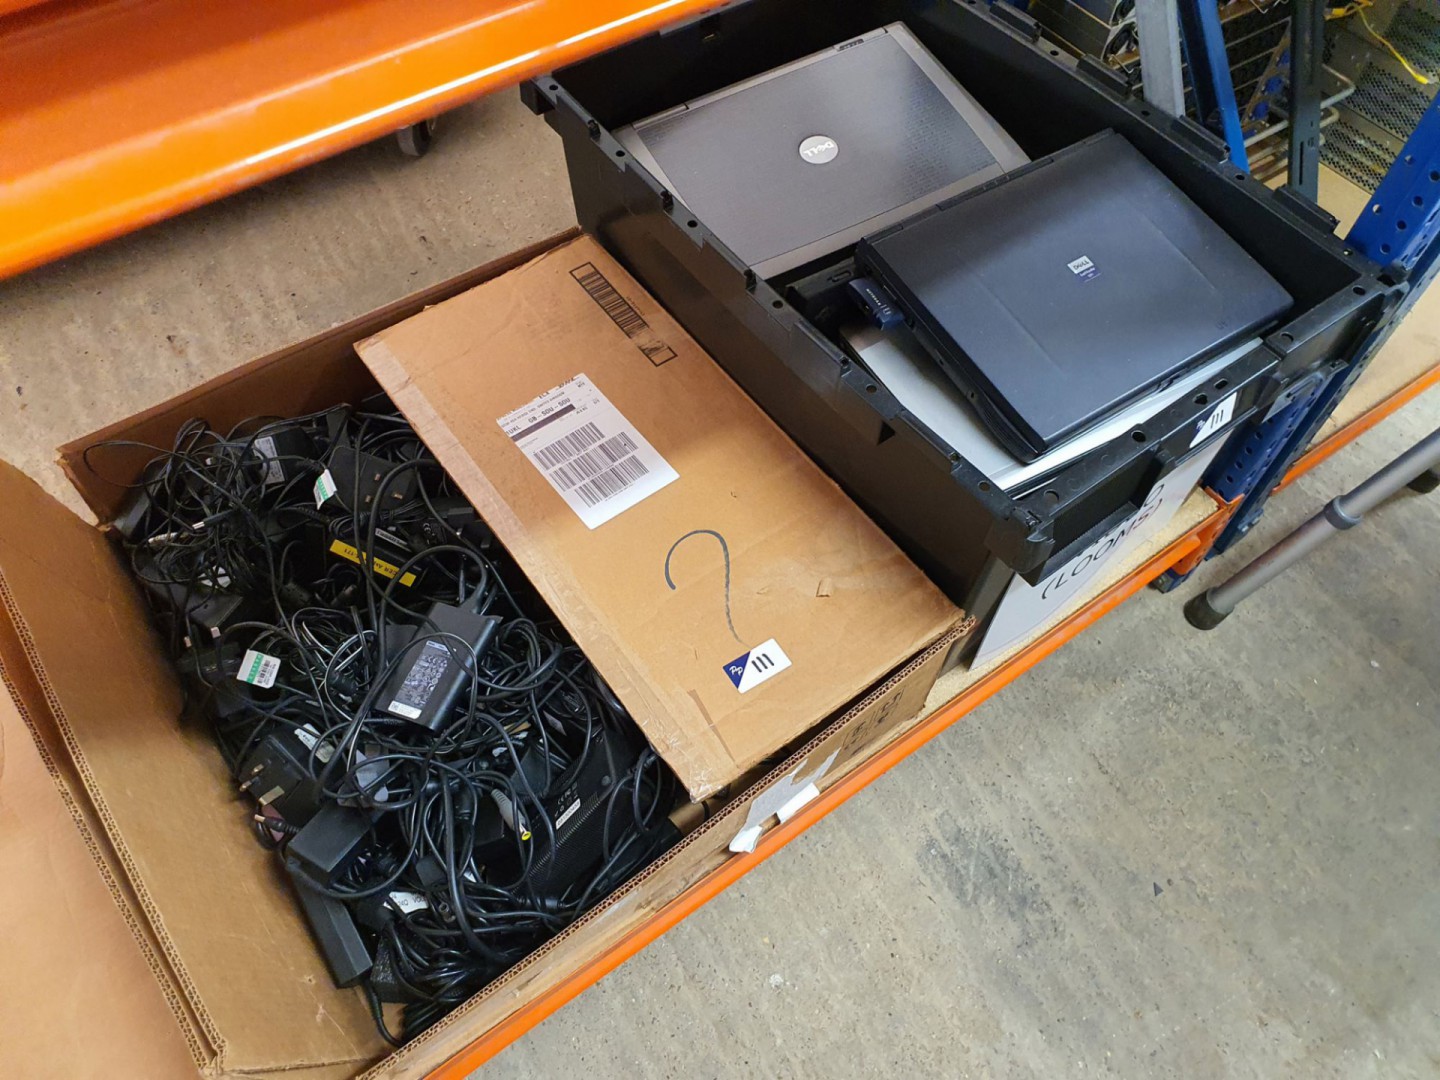 Qty various Dell, IBM, HP laptops, PSU etc